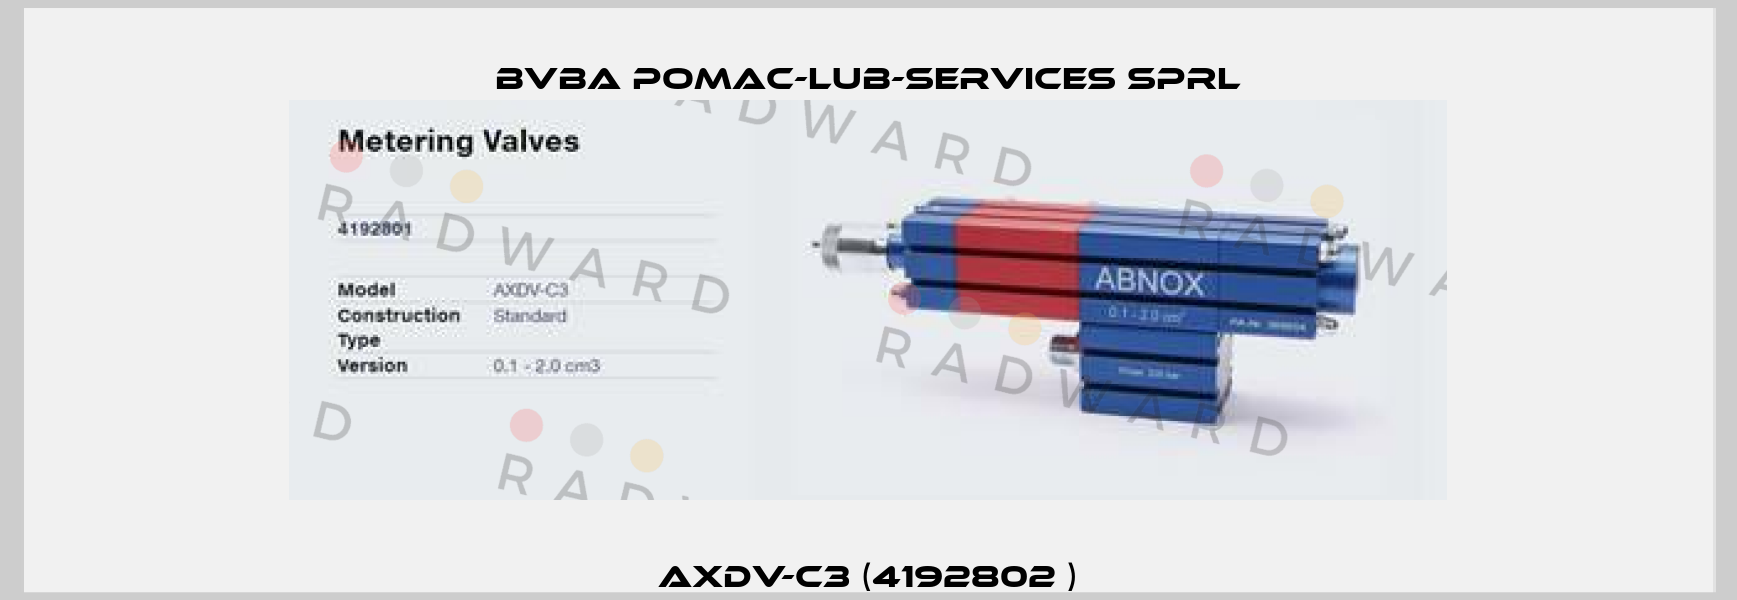 AXDV-C3 (4192802 ) bvba pomac-lub-services sprl